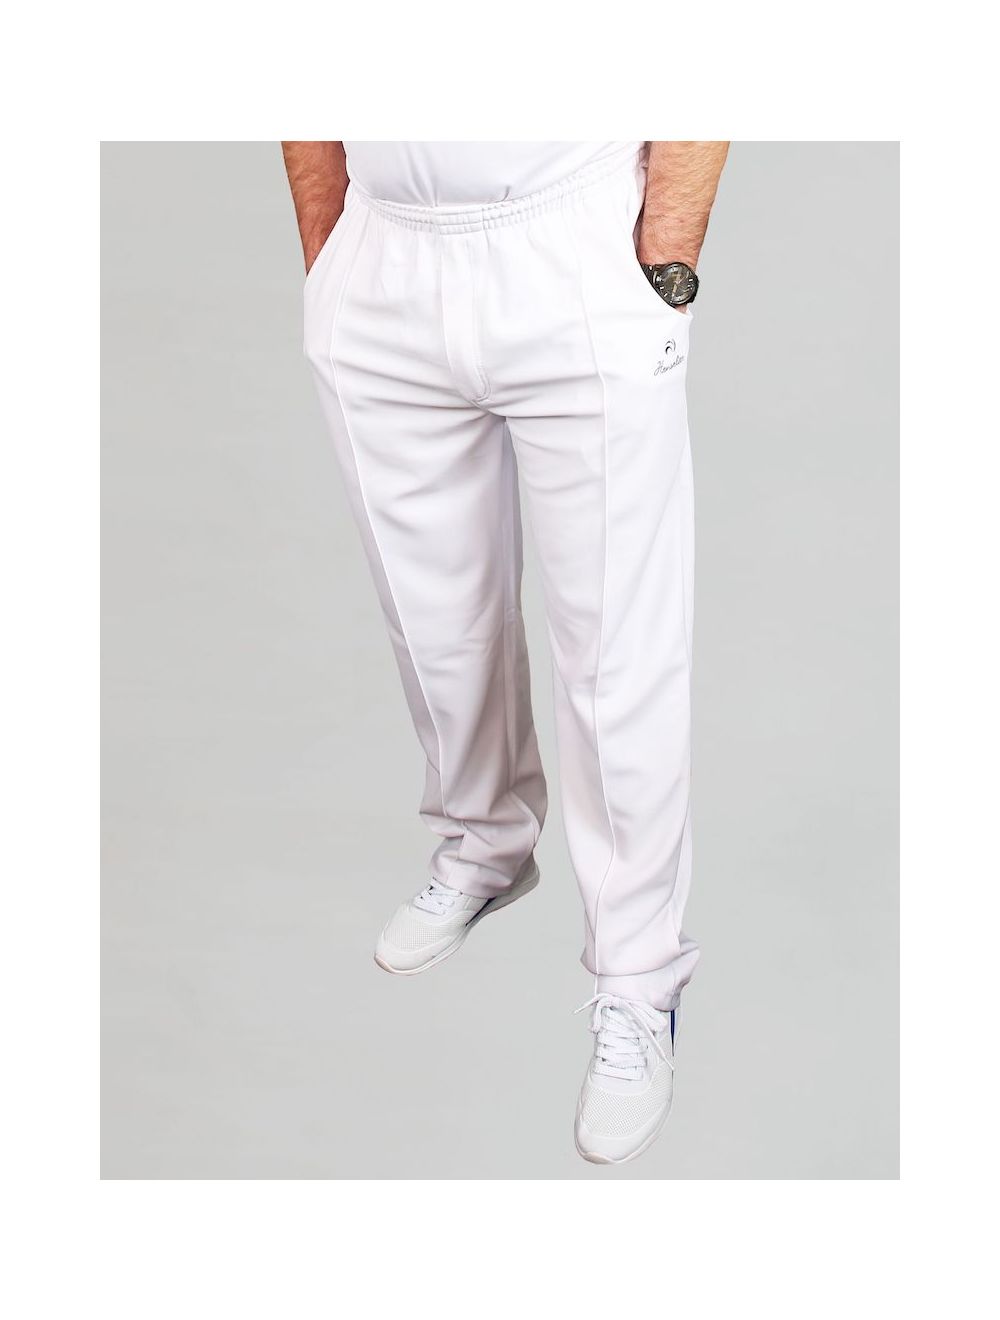 Tailored Flexi Waist Cream lawn bowls trousers, 82R,97St, 127st. BA logo |  eBay